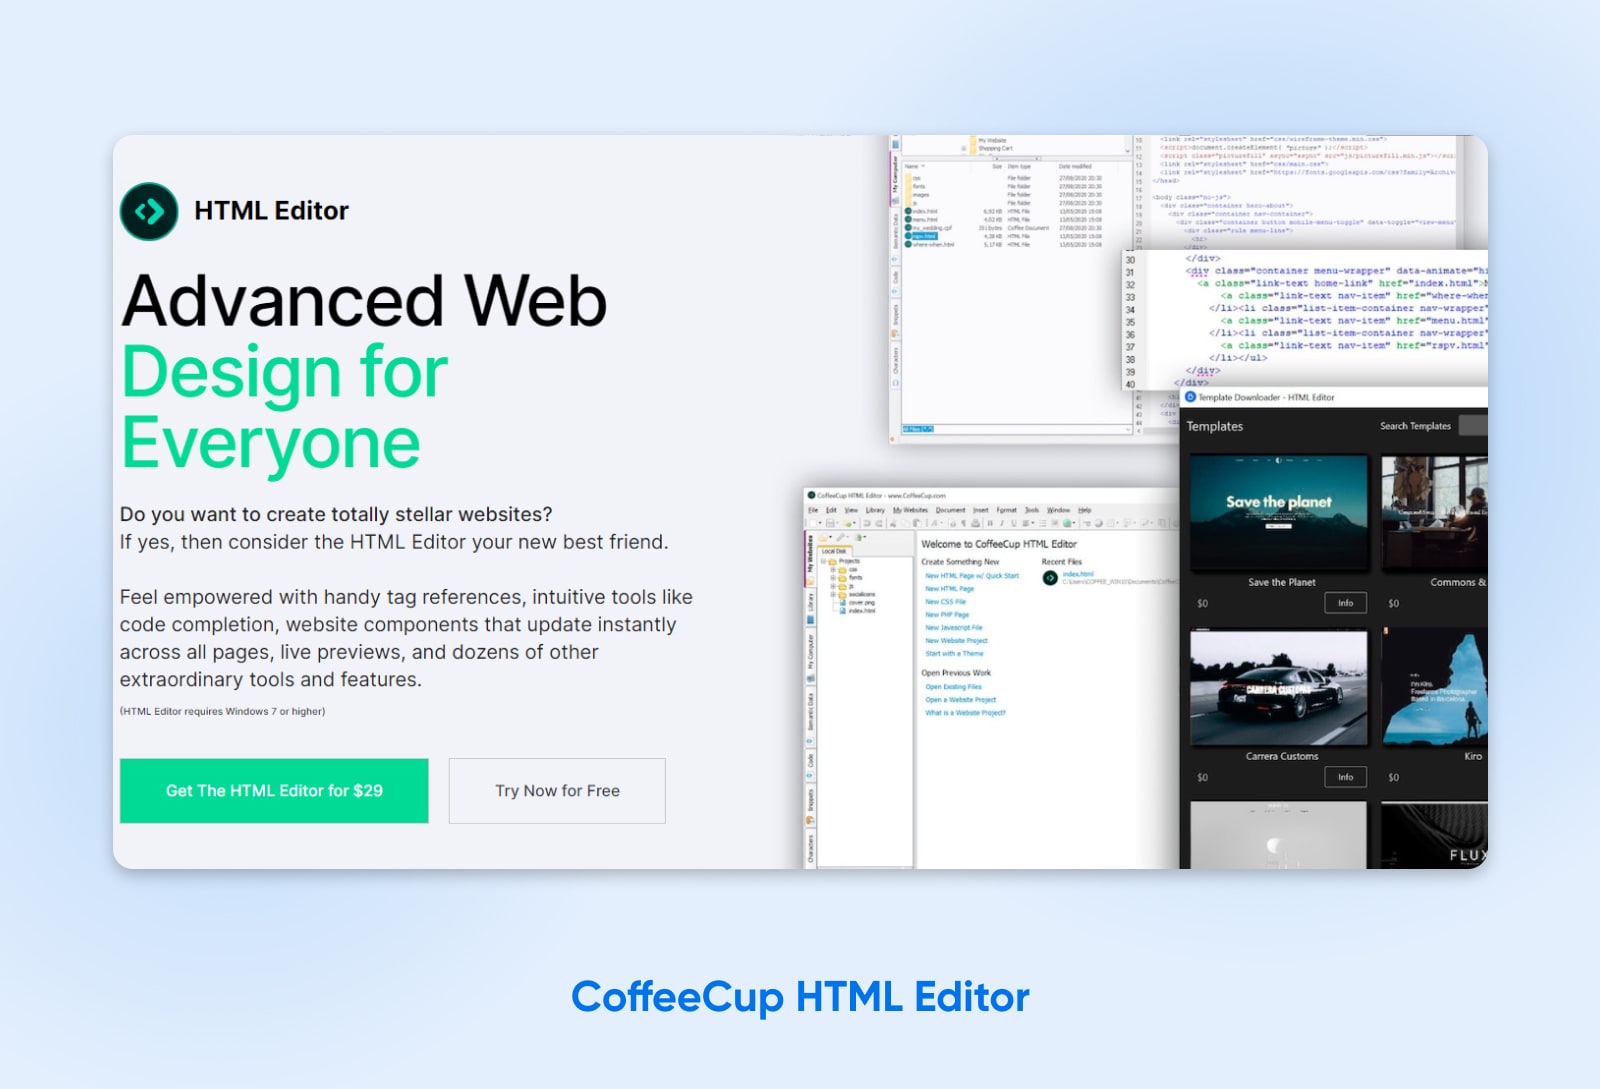 coffeecup html editor webpage screenshot